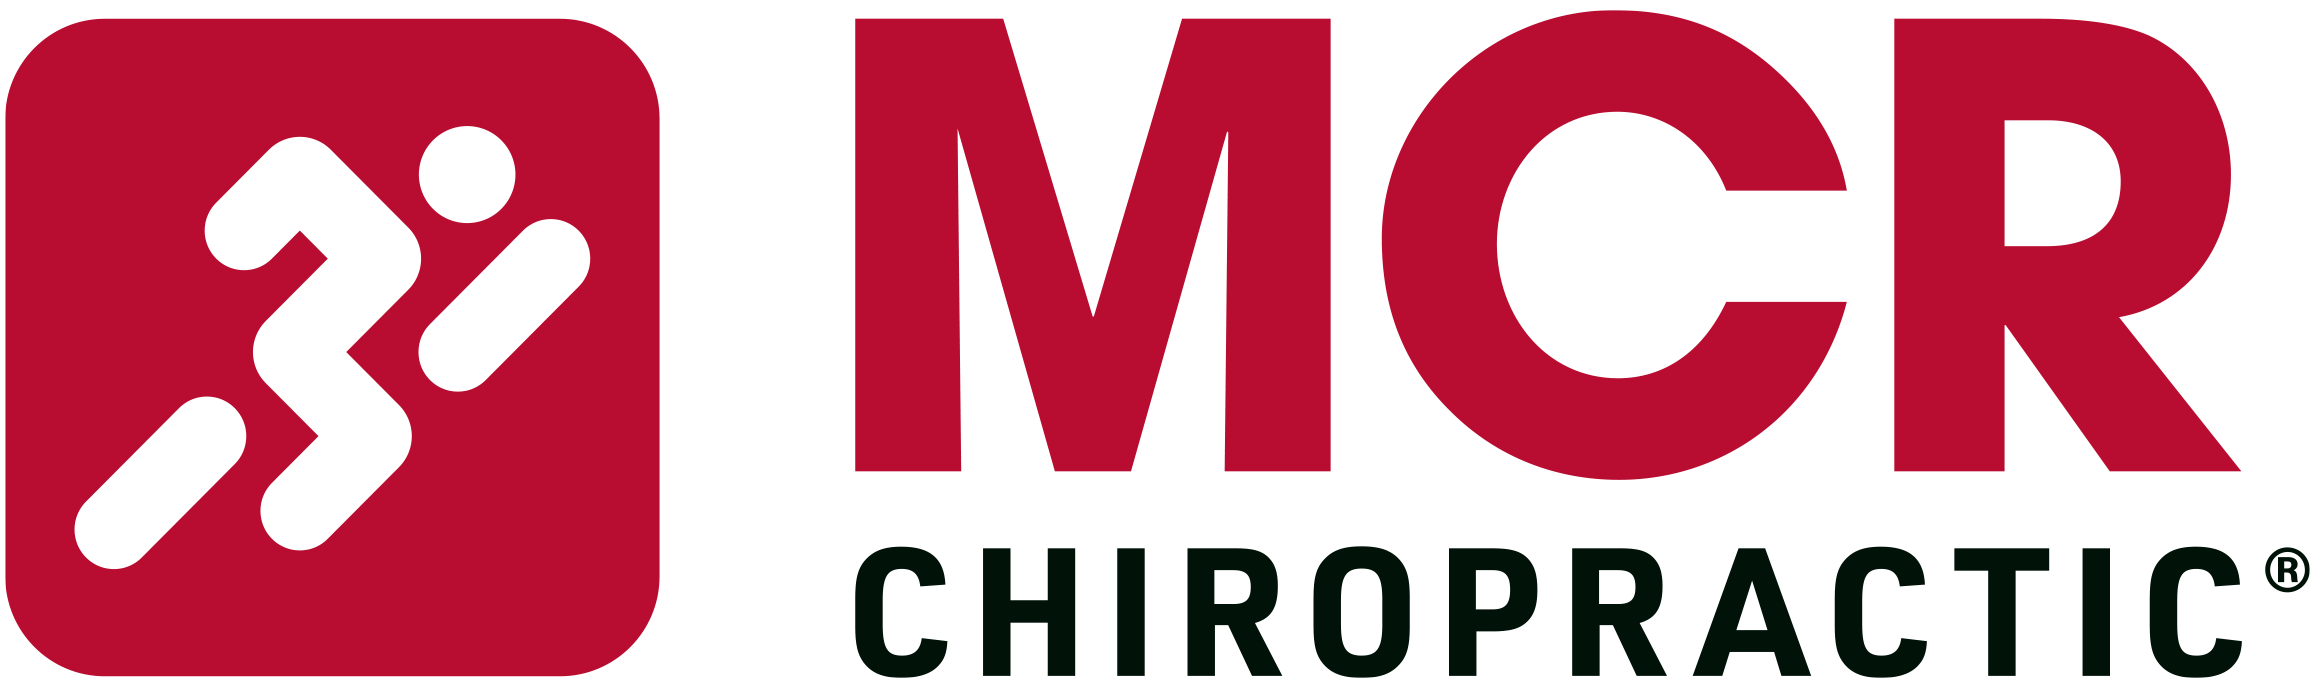 mcr logo